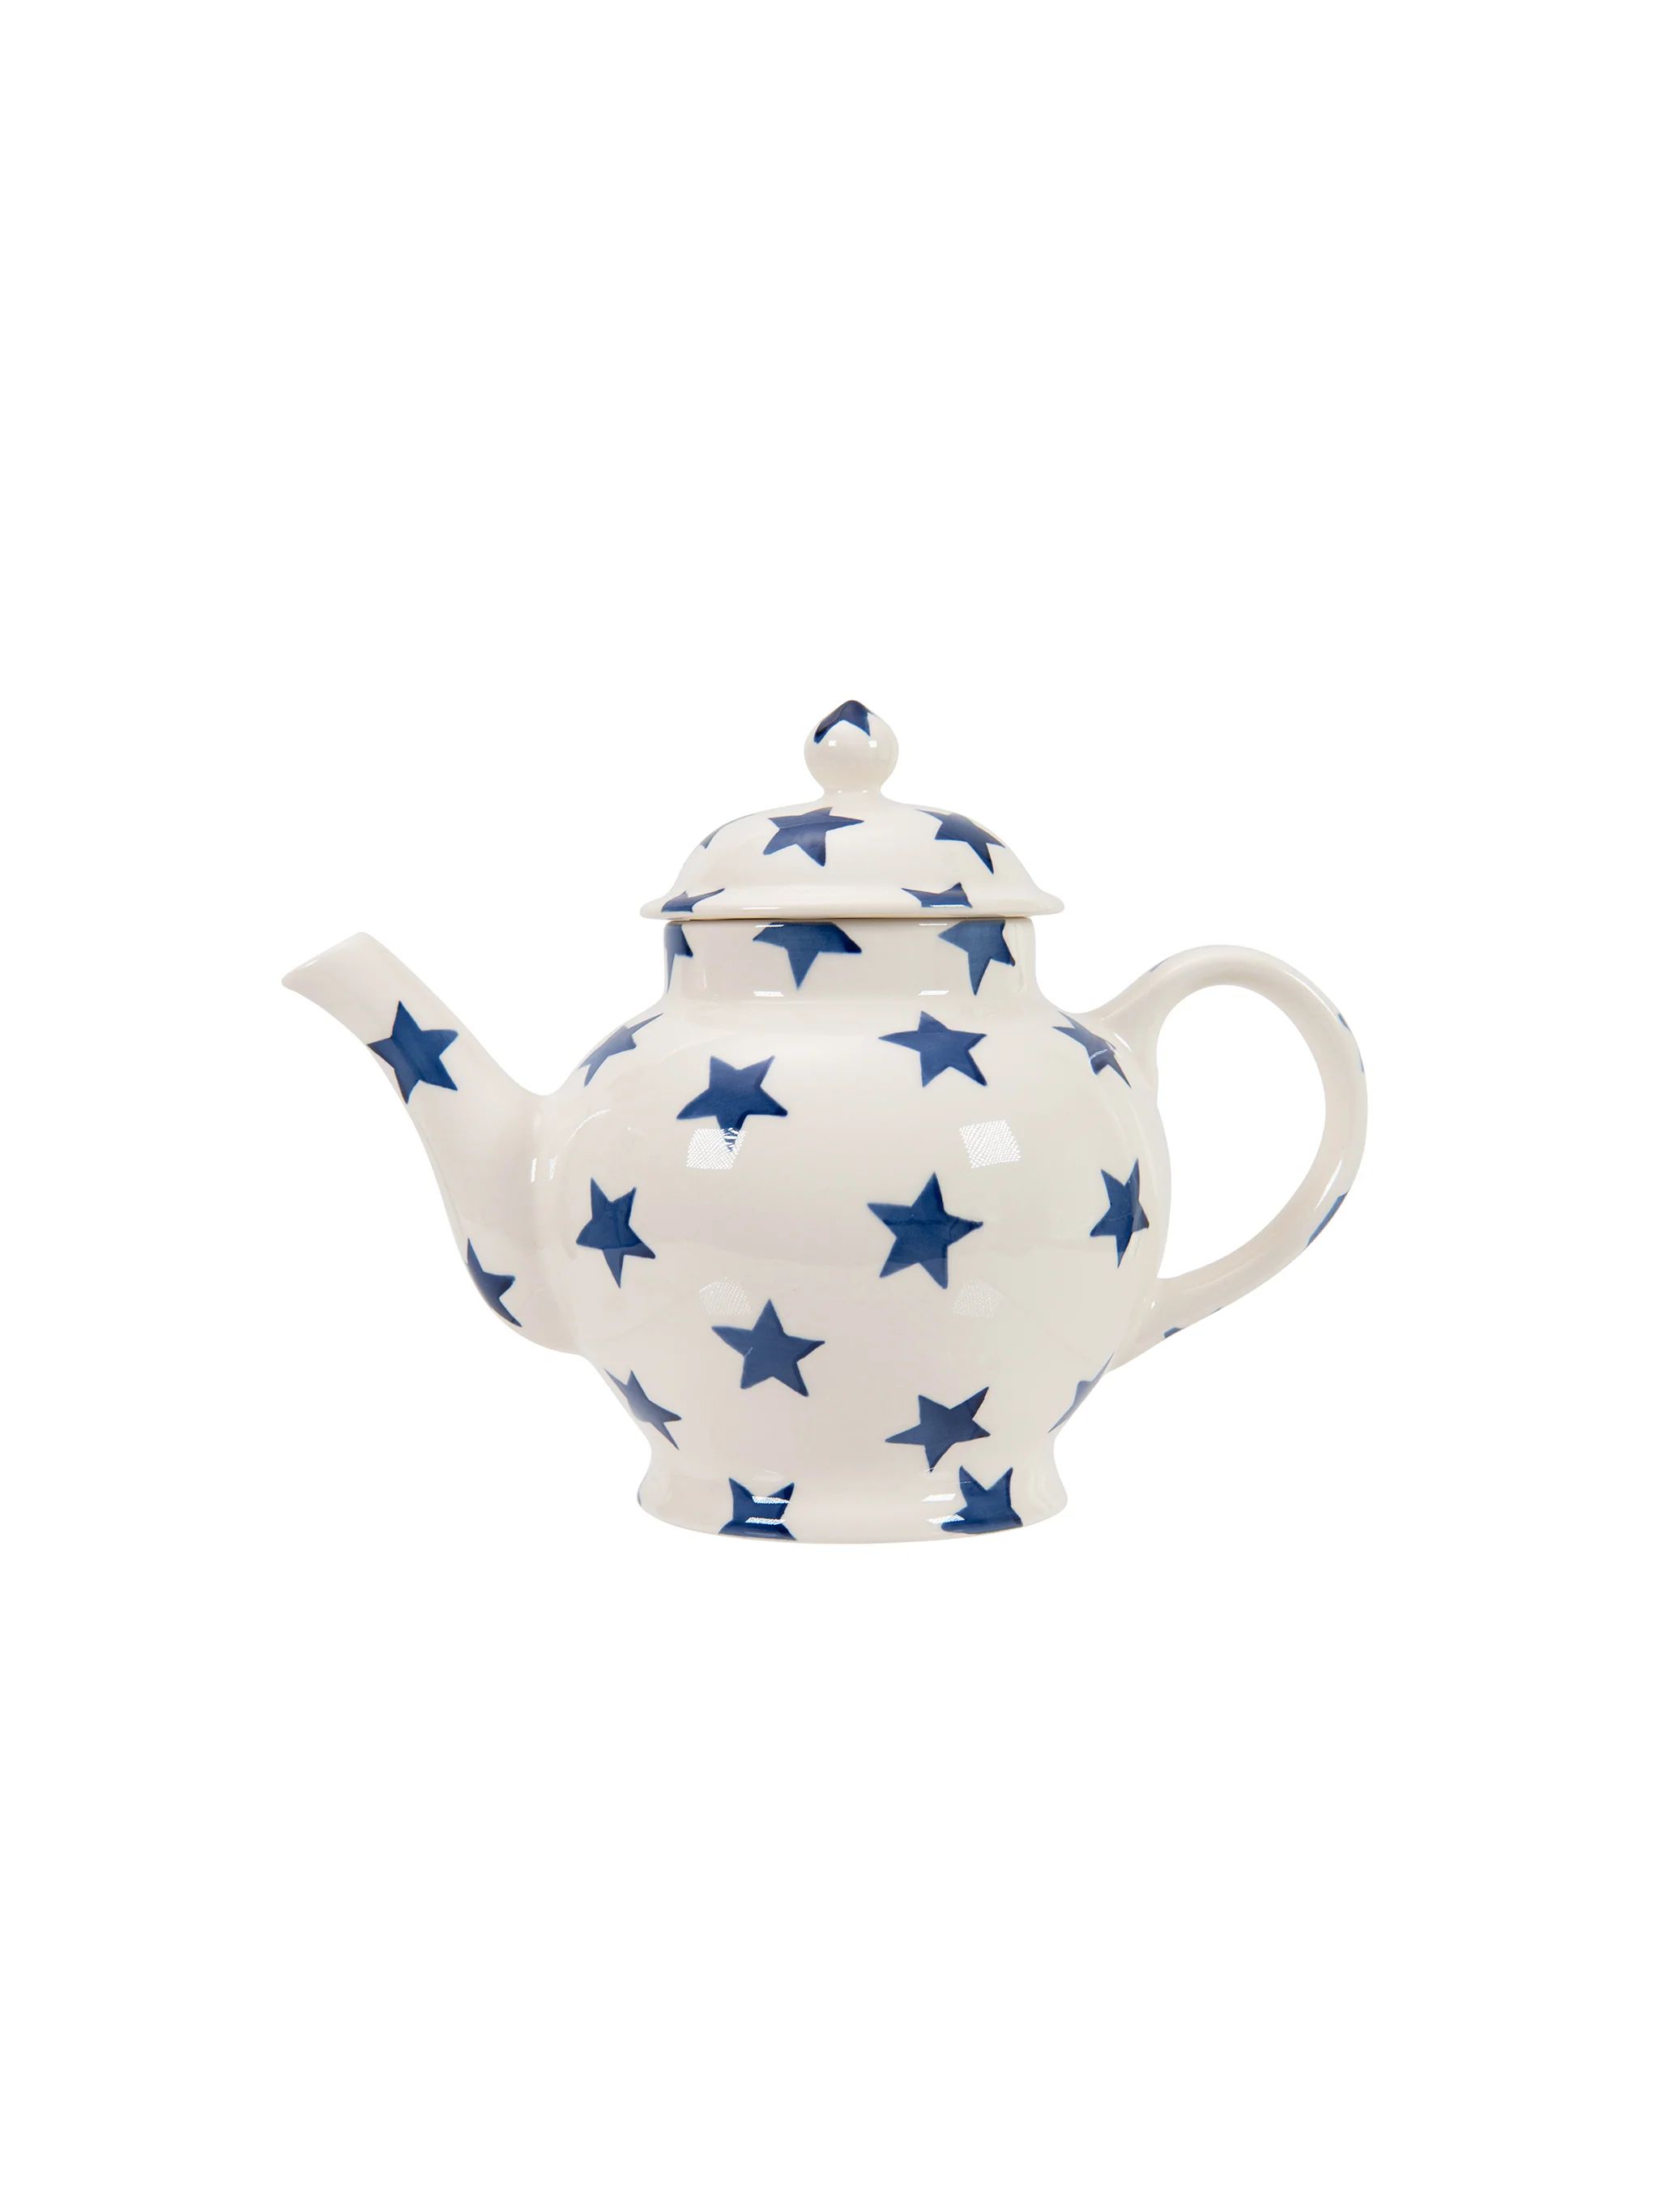 Emma Bridgewater Blue Star 4 Mug Teapot Boxed | Weston Table